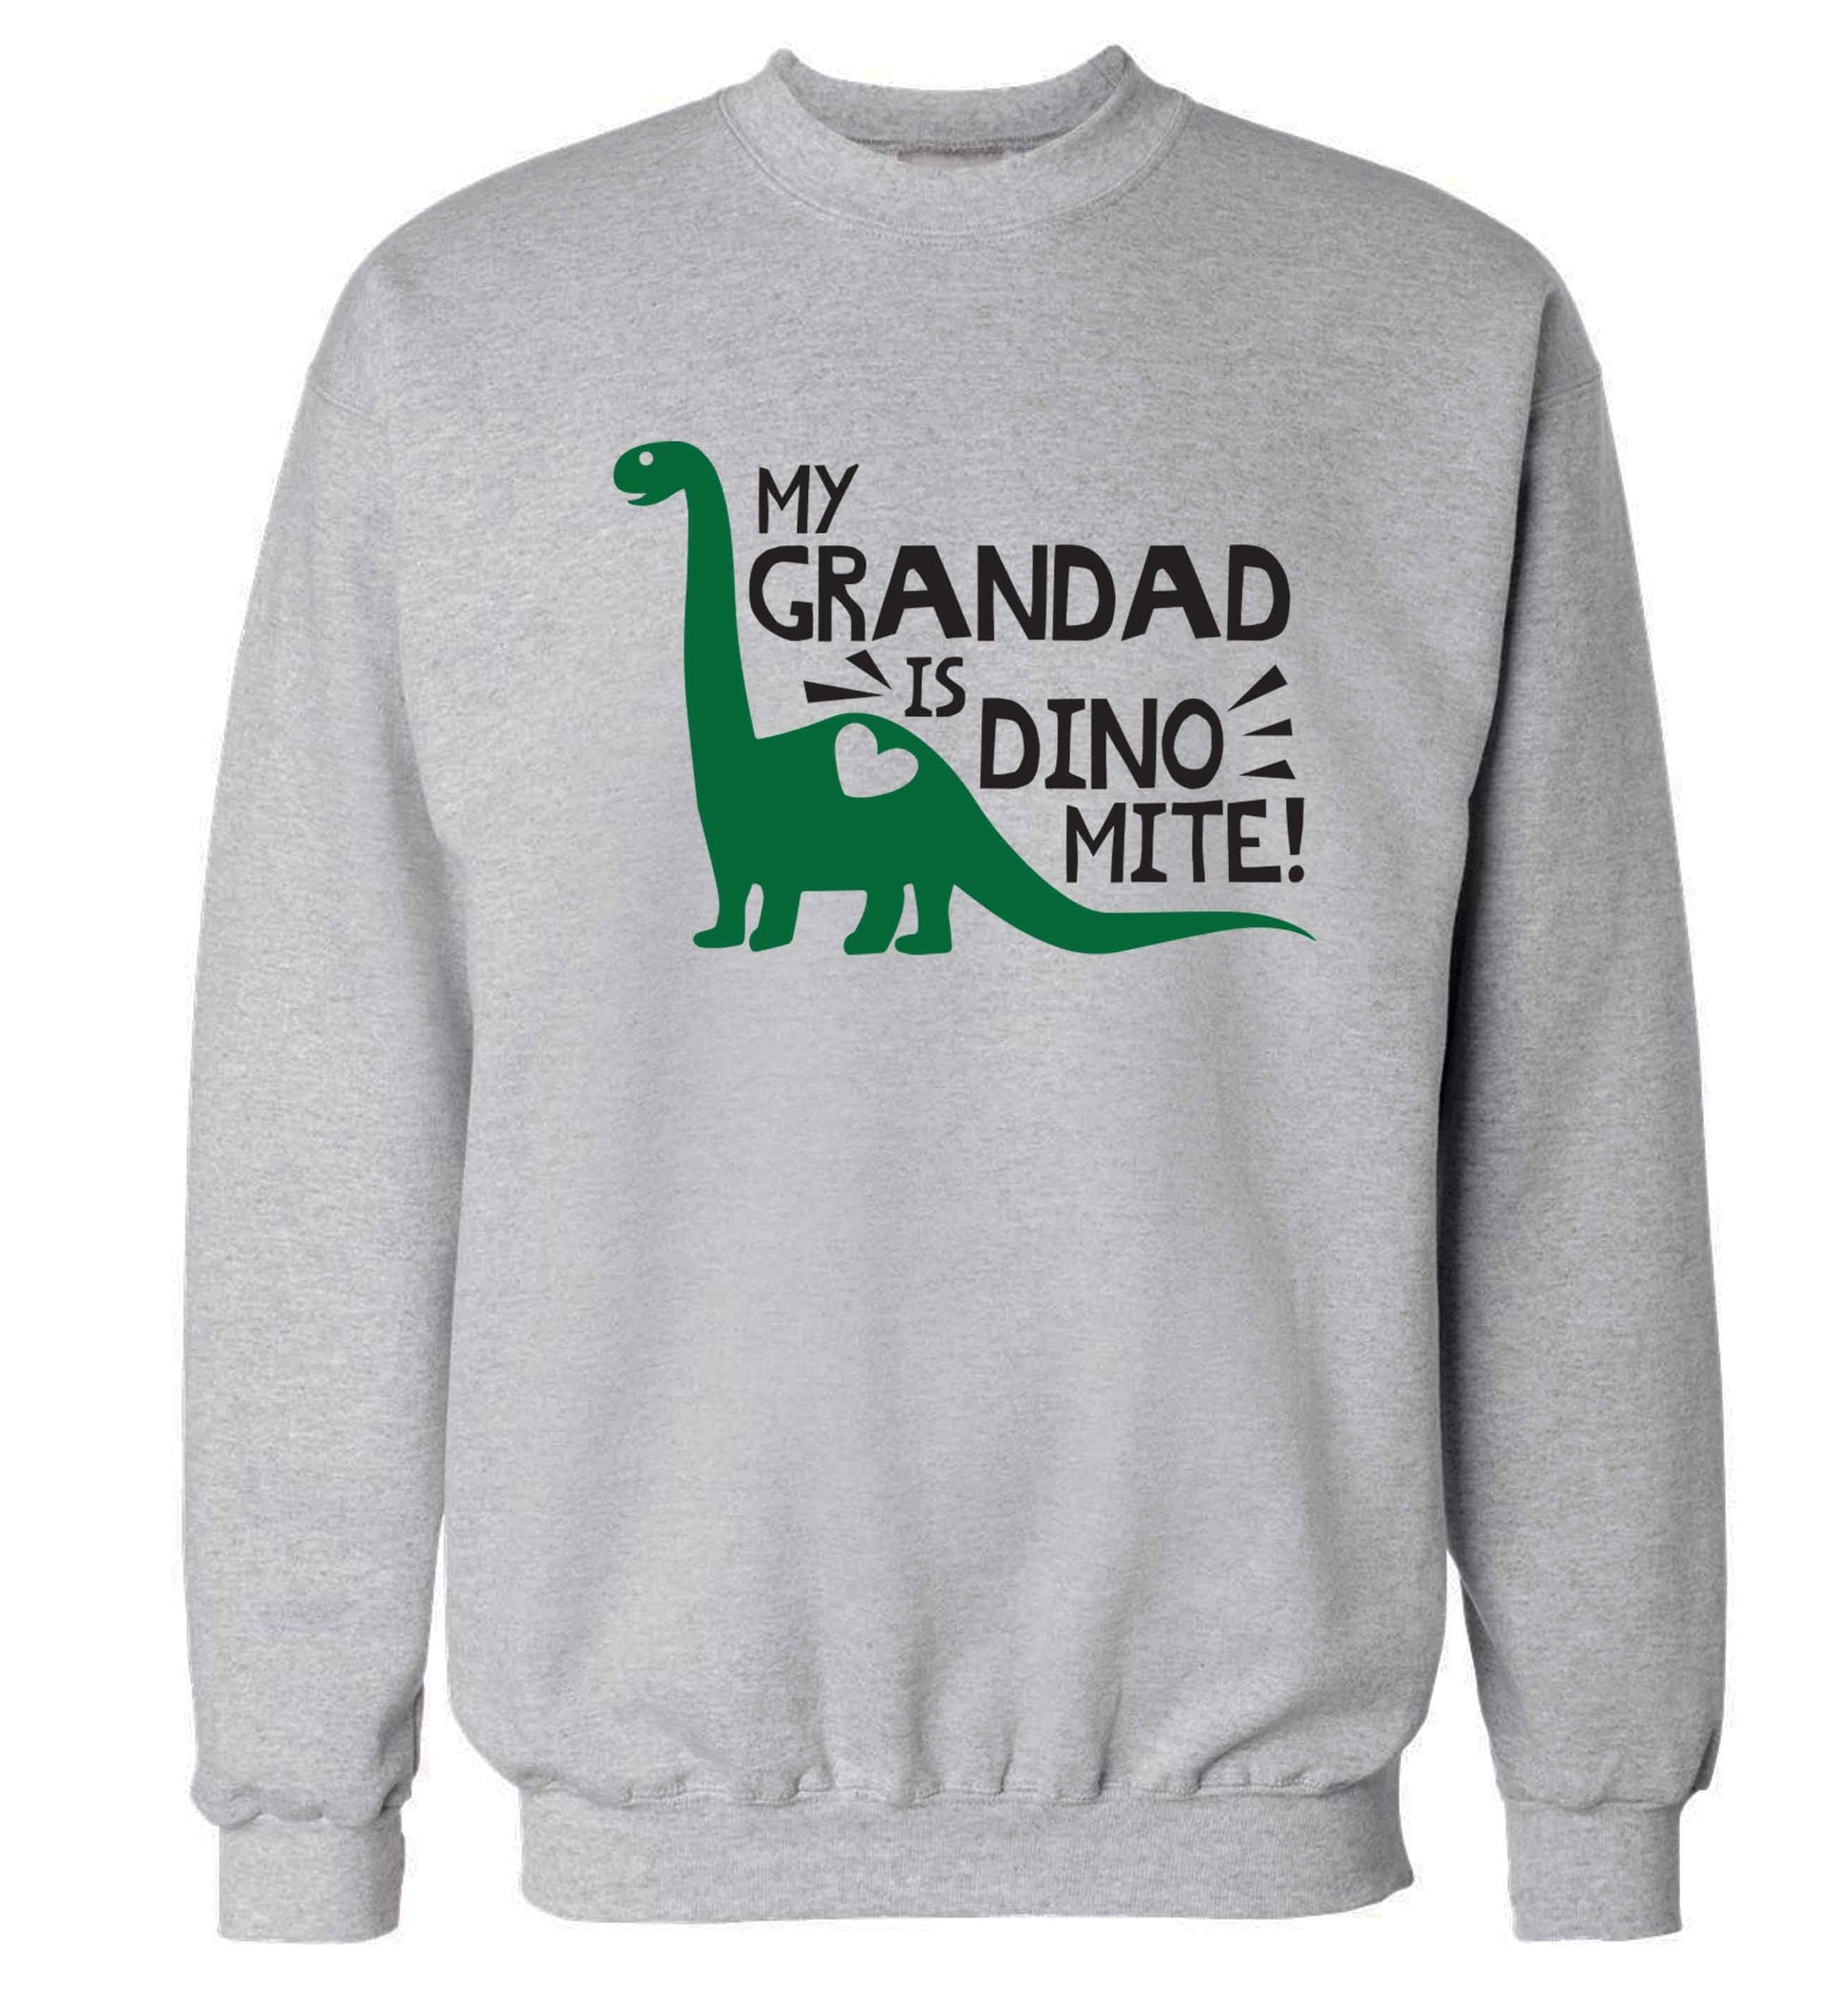 My grandad is dinomite! Adult's unisex grey Sweater 2XL